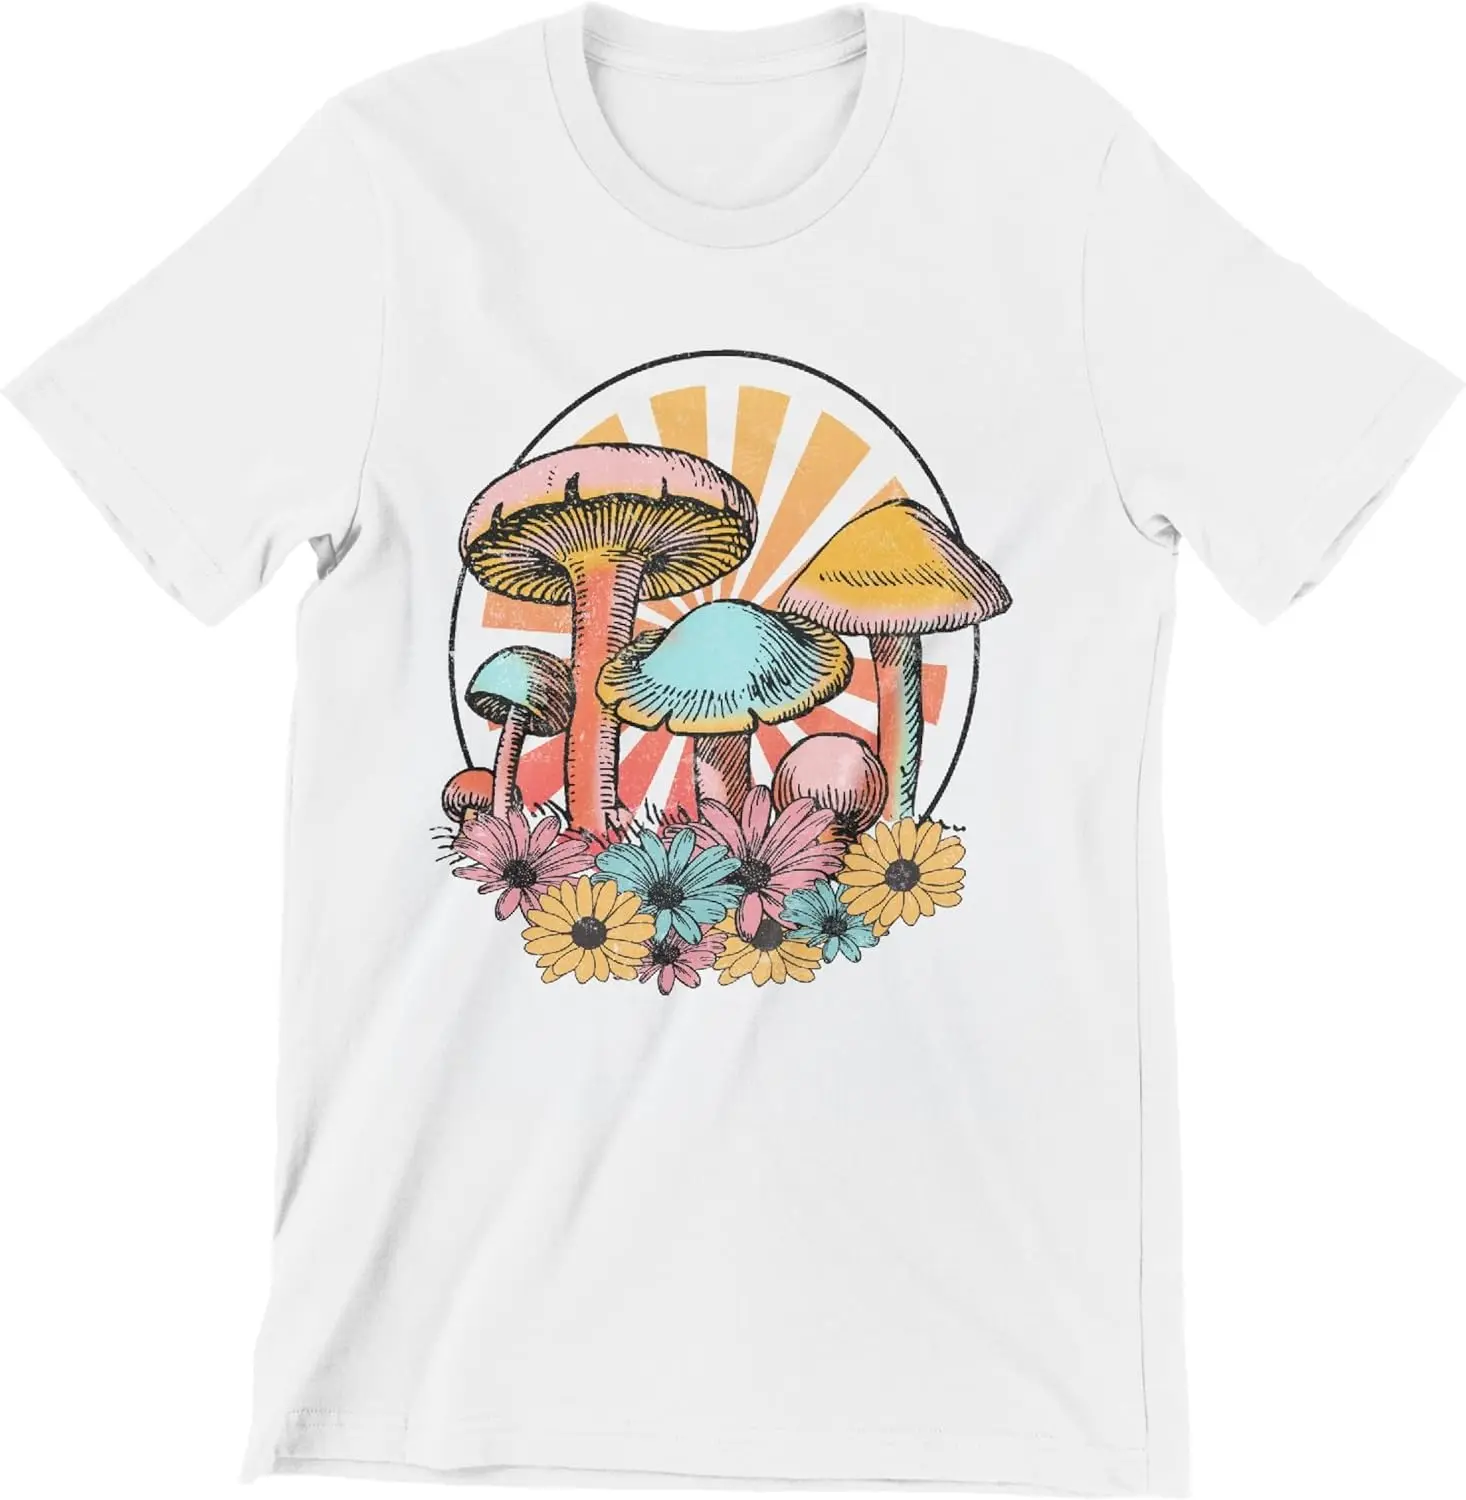 

Mushroom T-Shirt Gifts Classic Funny Tee Shirts-100% Cotton